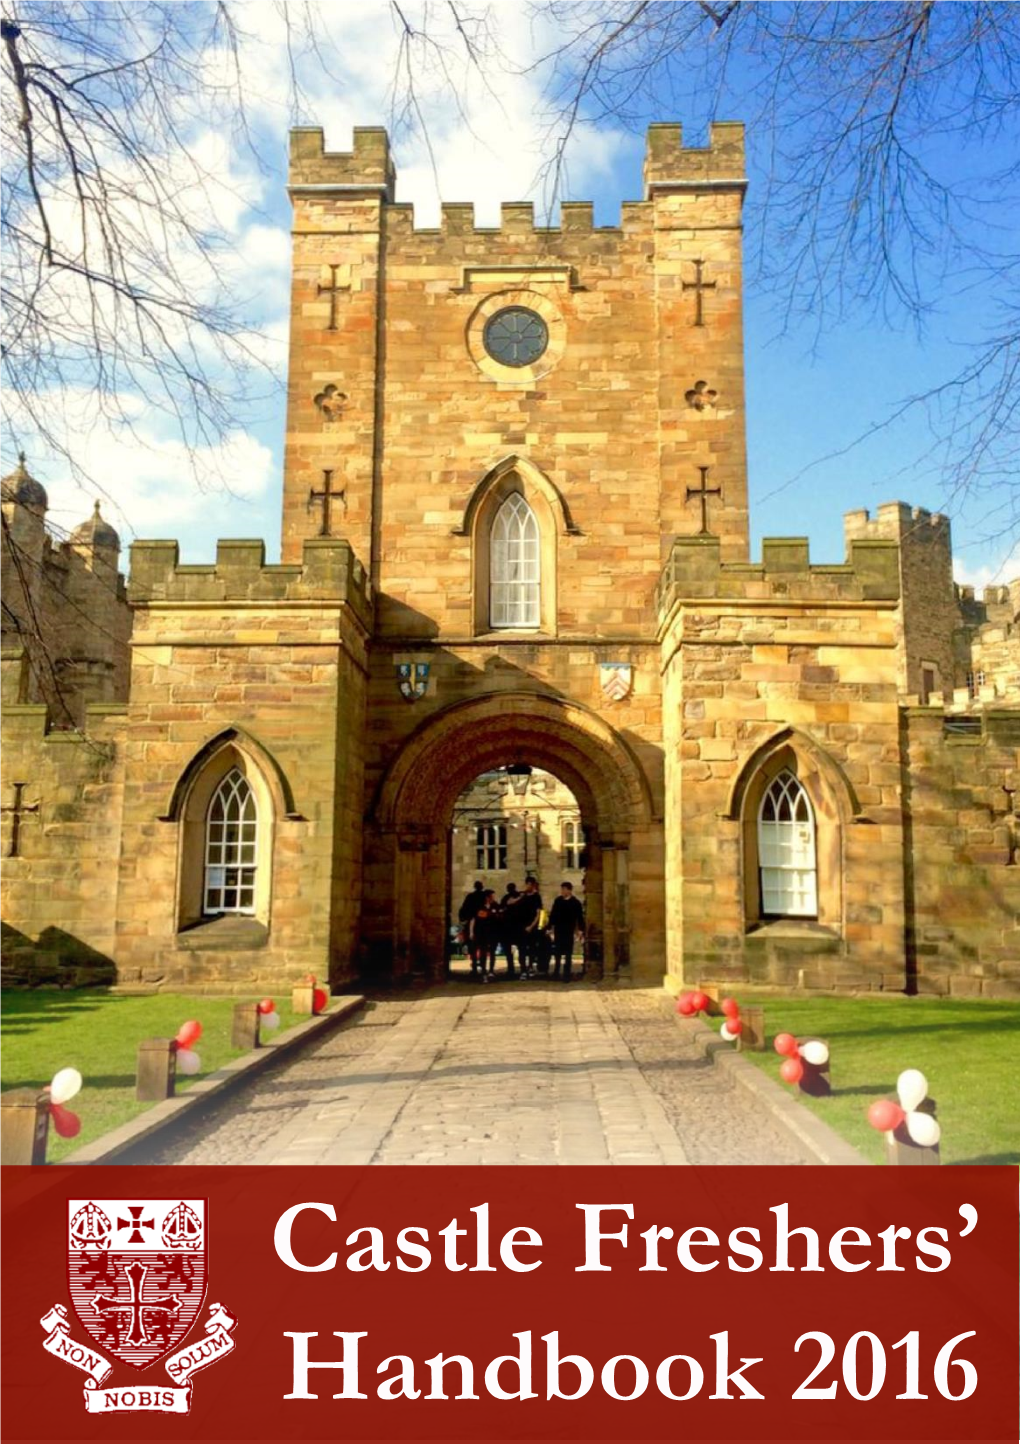 Castle Freshers' Handbook 2016